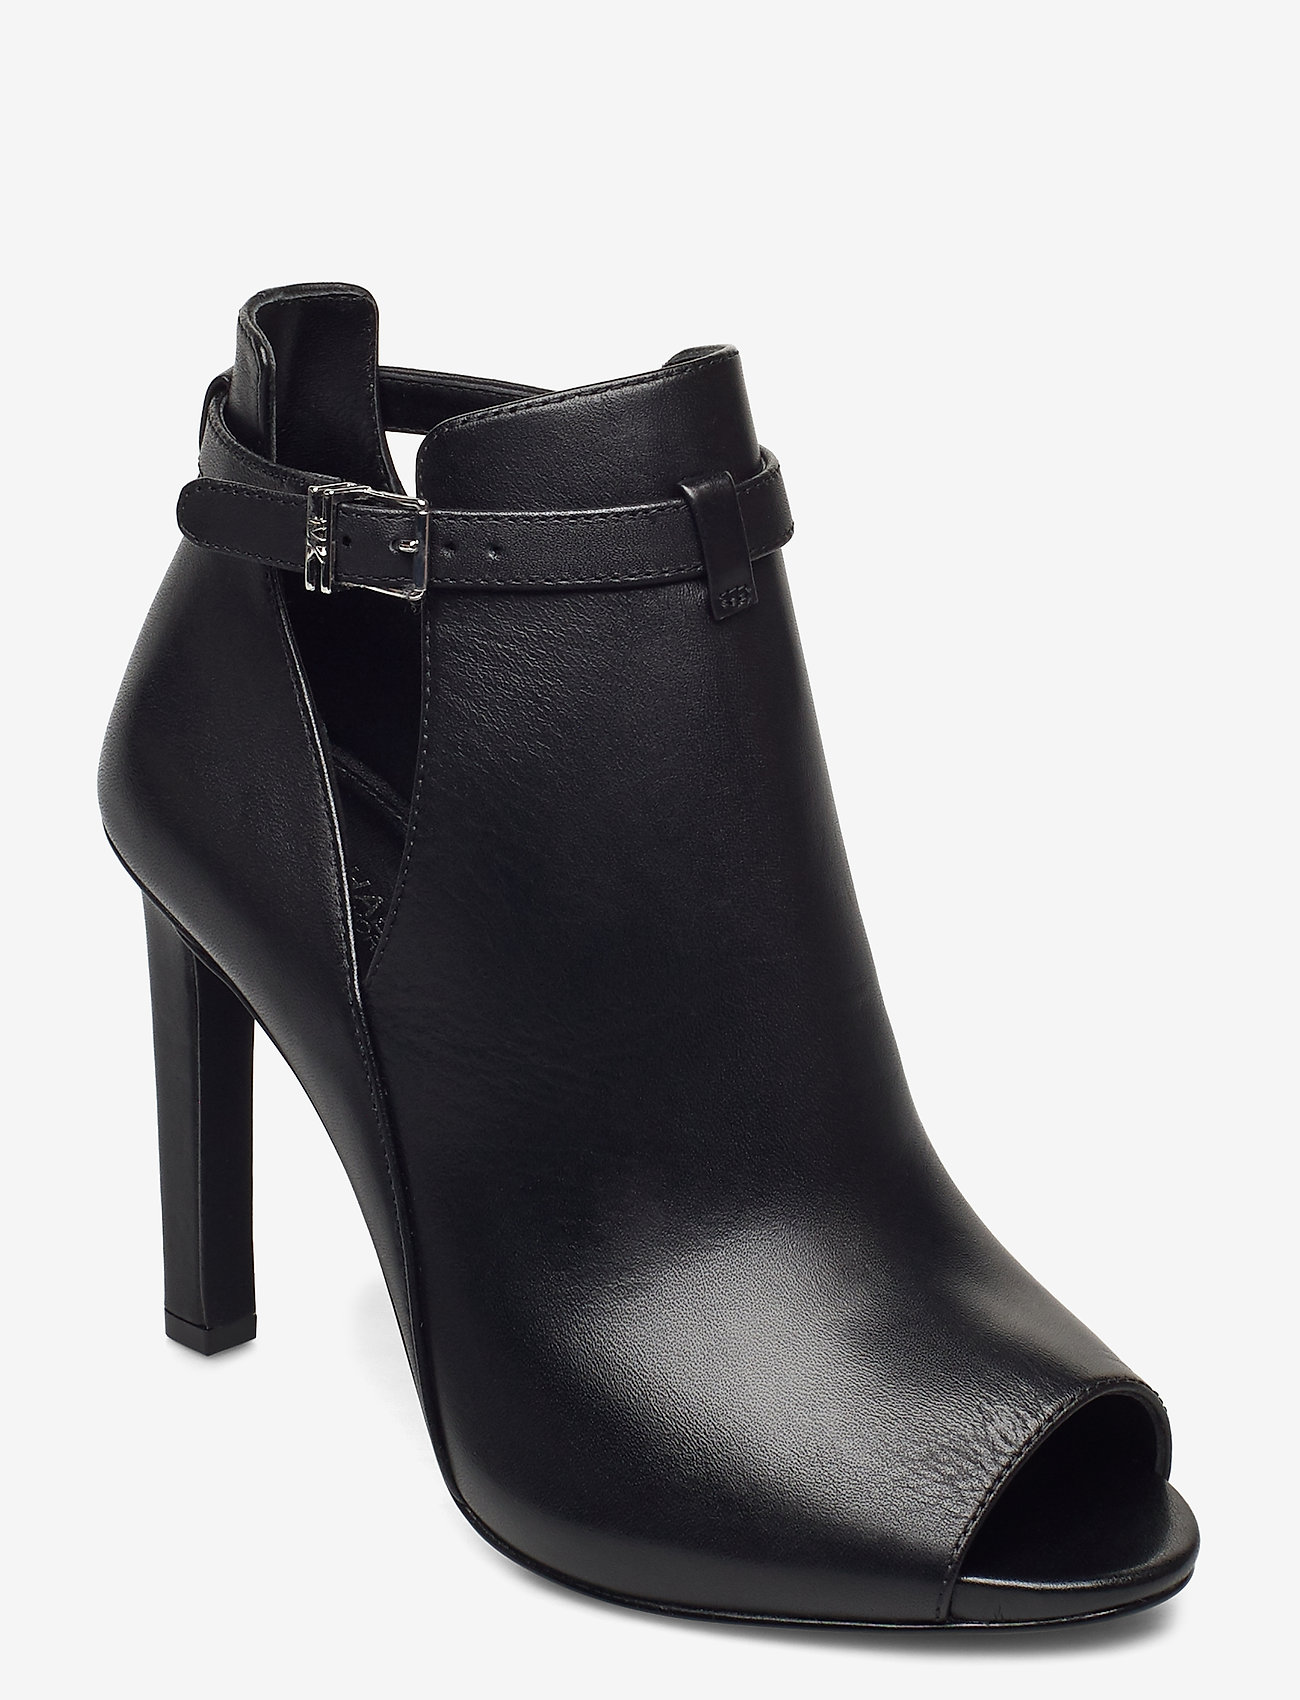 michael kors black and white heels